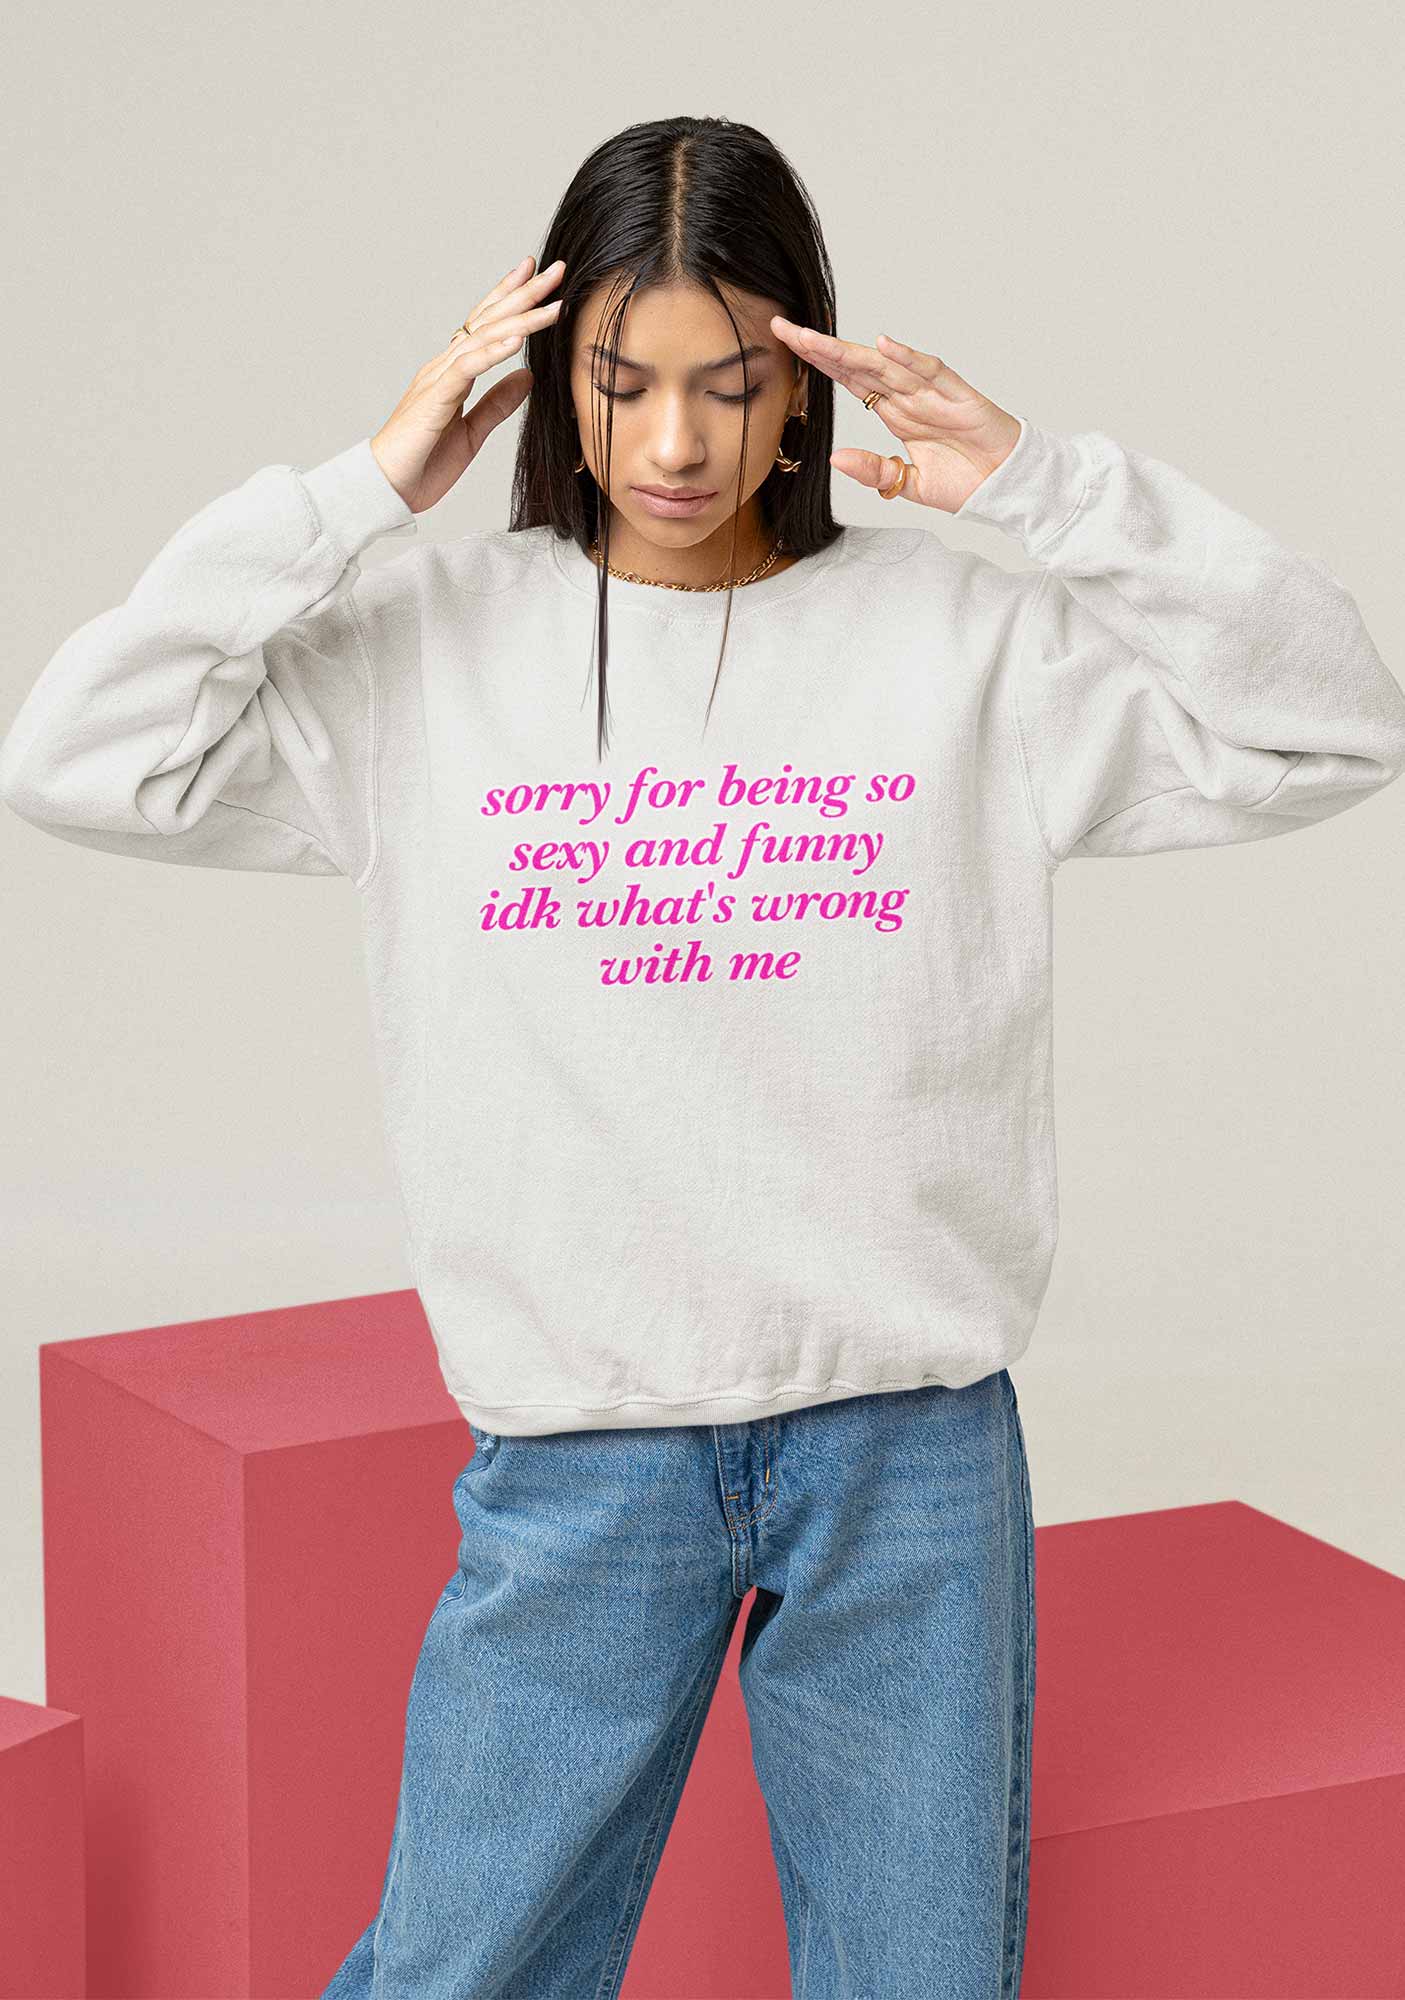 Sorry For Being So Funny Y2K Sweatshirt